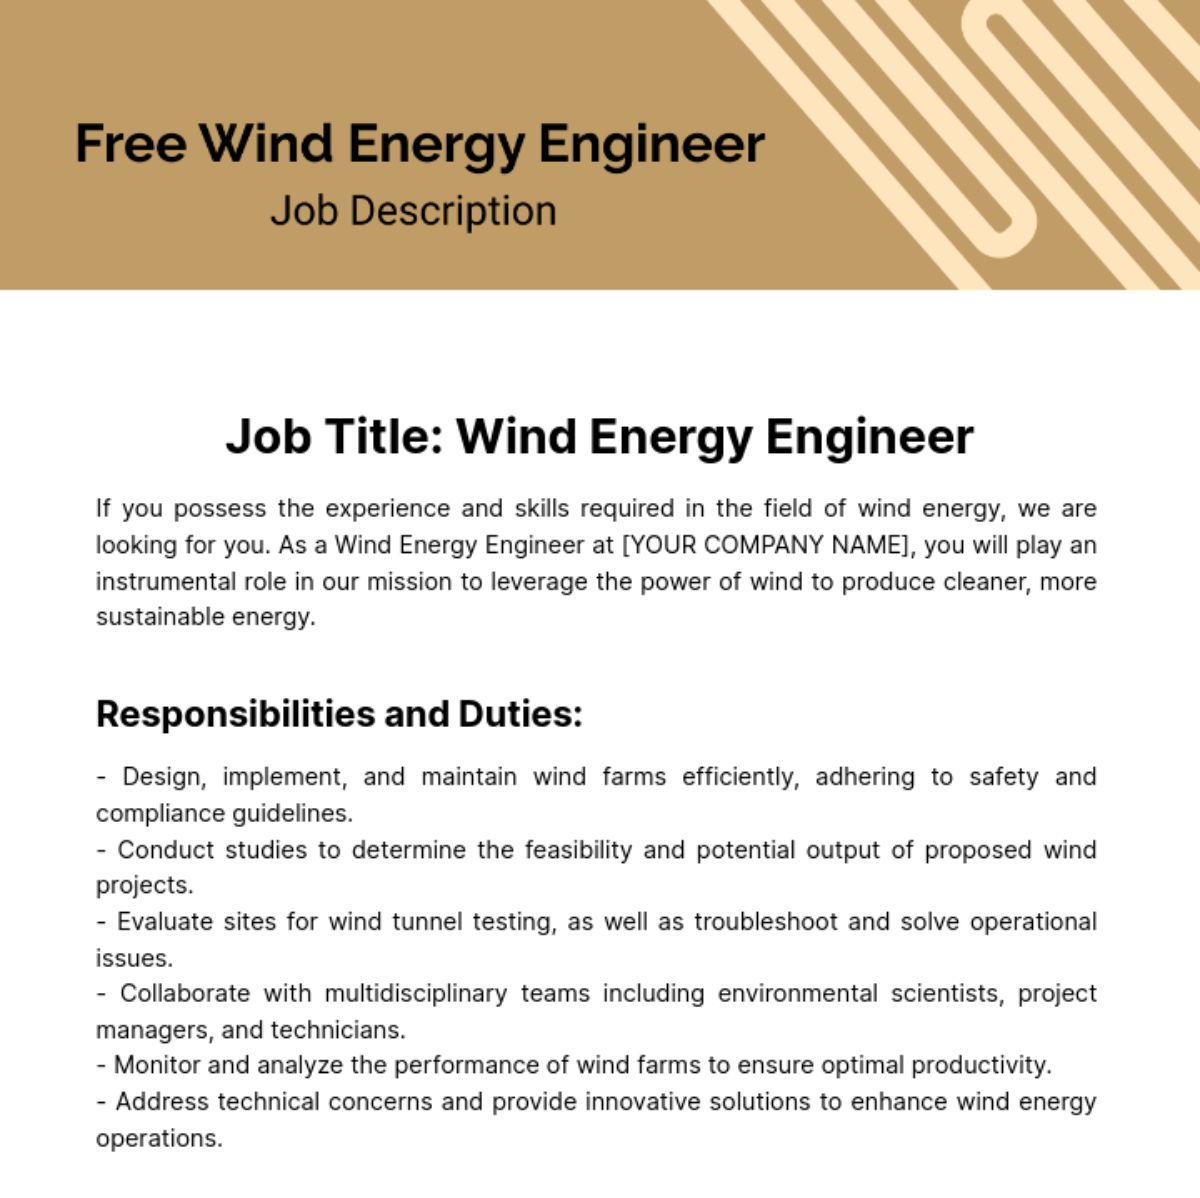 Wind Energy Engineer Job Description Template